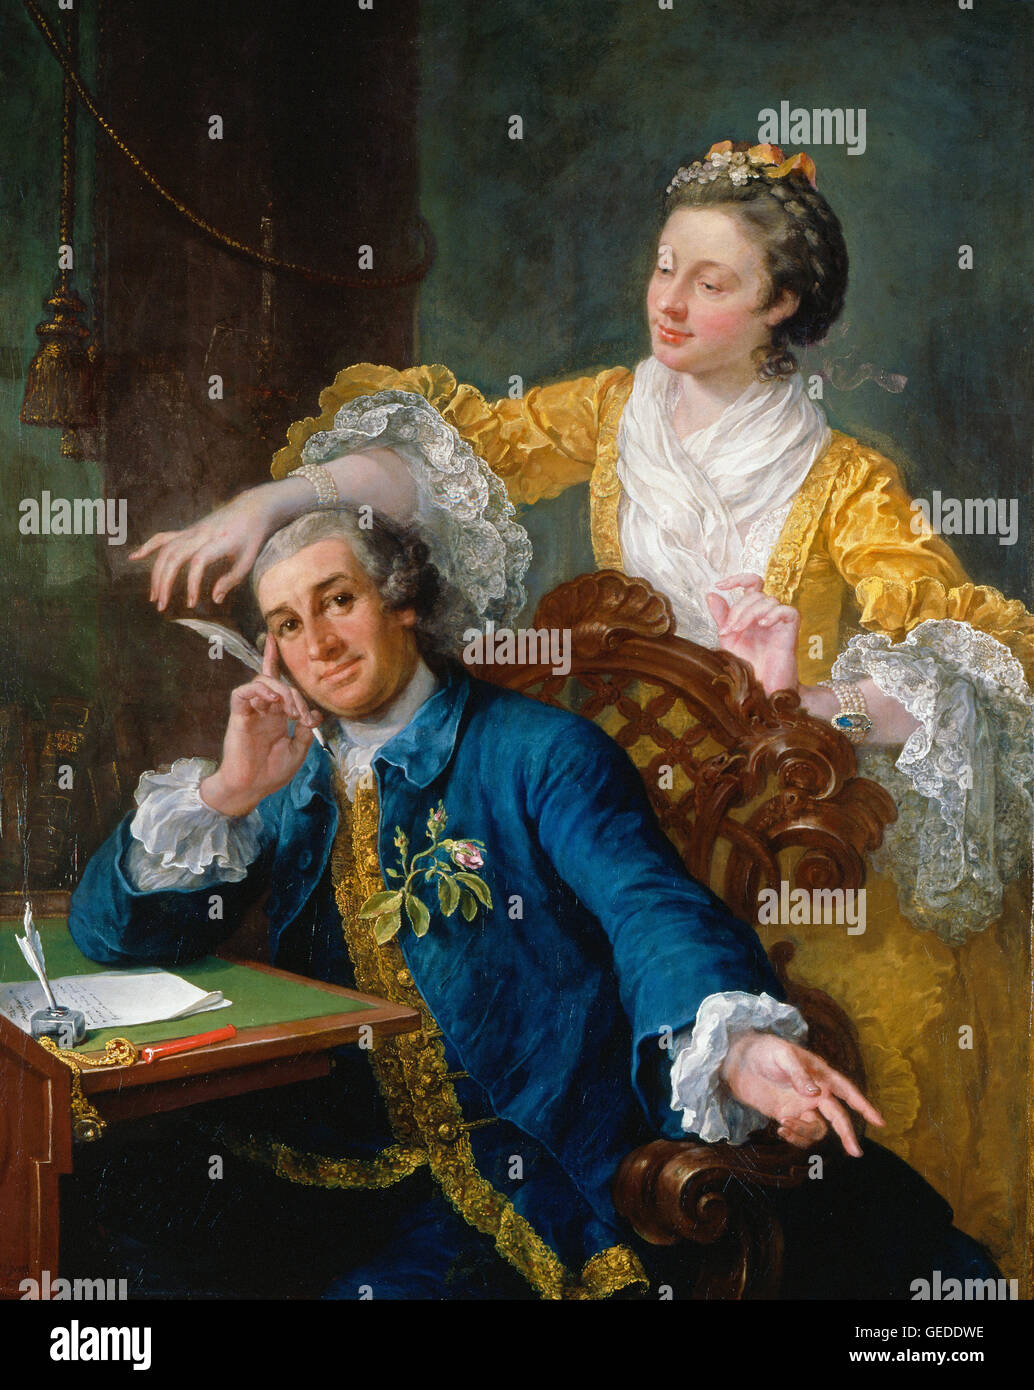 William Hogarth - David Garrick (1717-79) with his wife Eva-Maria Veigel, La Violette or Viol Stock Photo